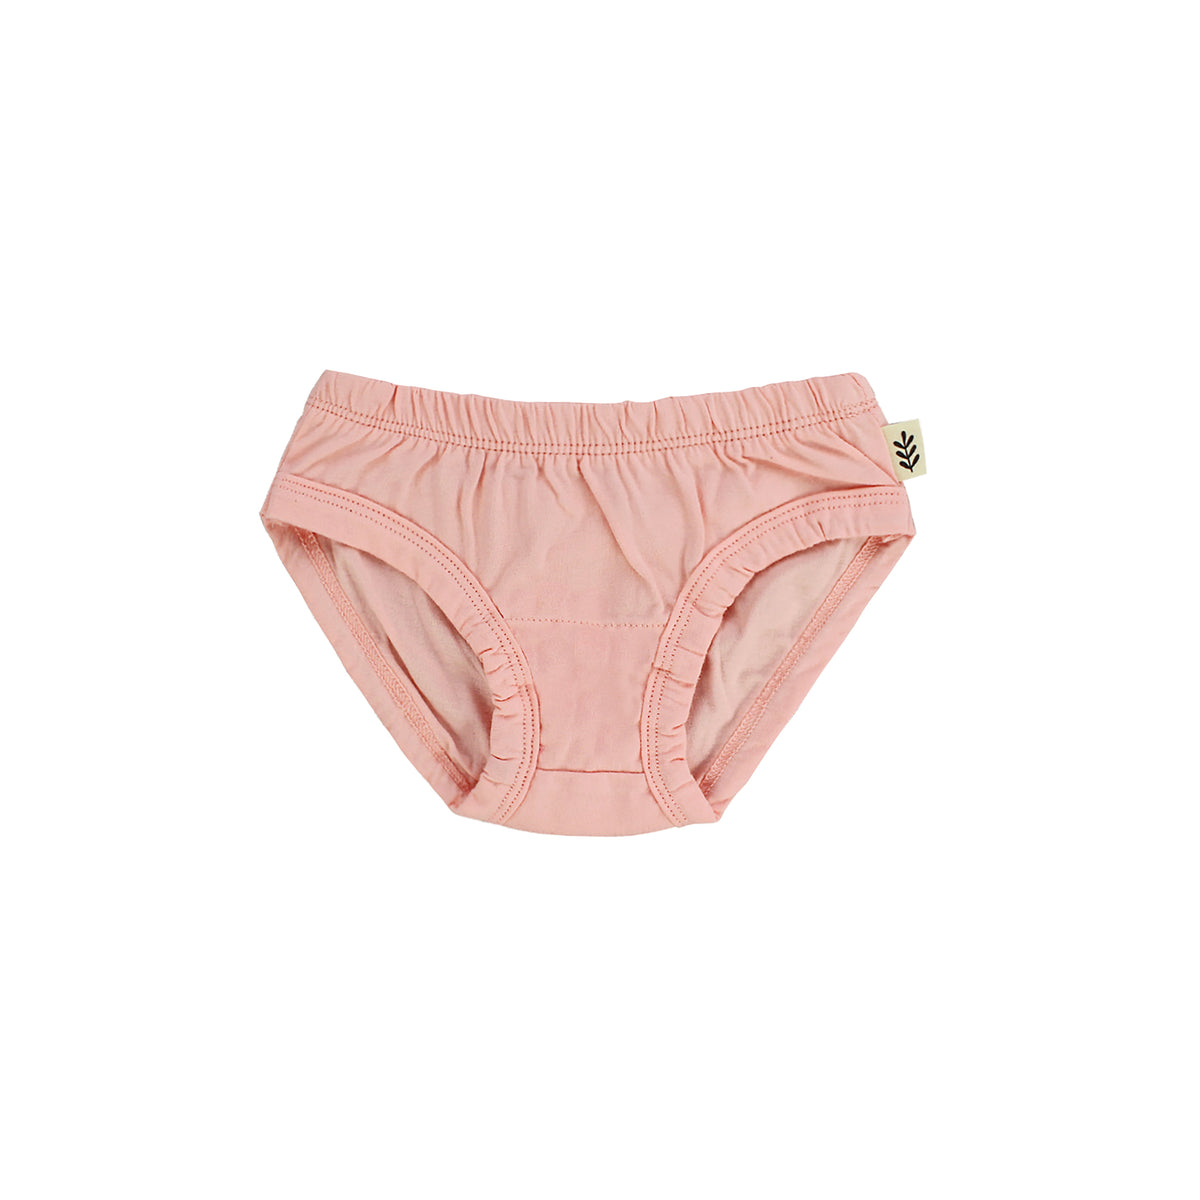 Girls Panties 3 PK (Spotty/Elephant/Floral) . Organic Cotton